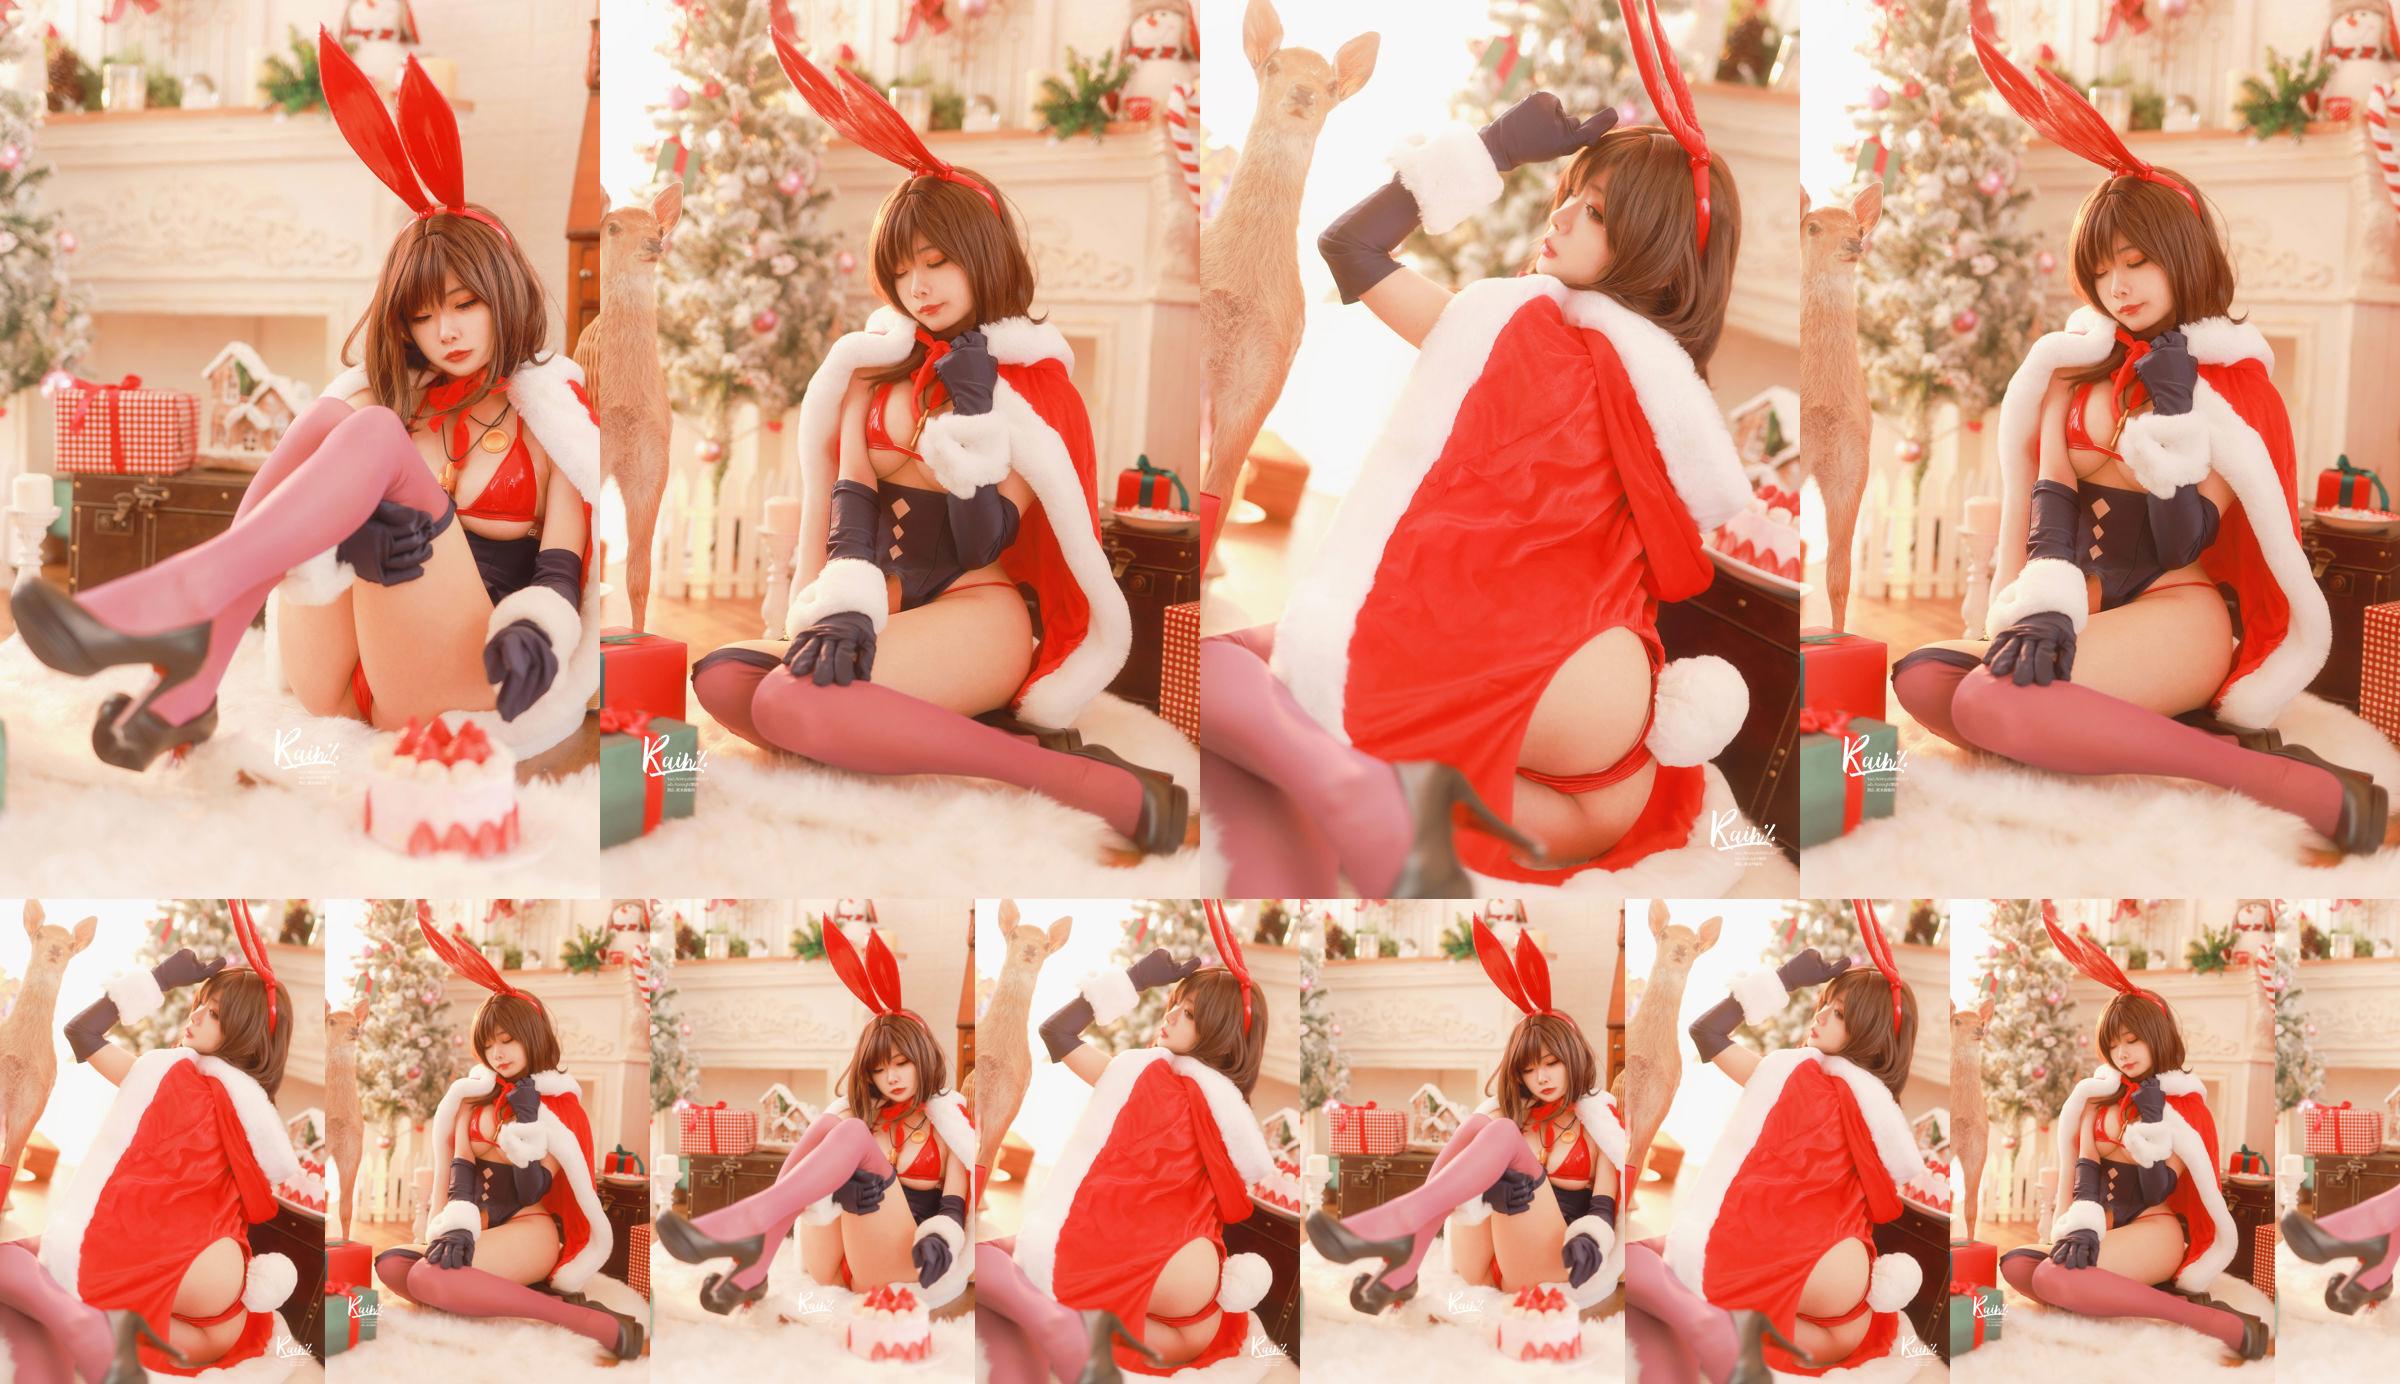 [Net Red COSER Photo] Anime blogger Rainight 魈雨-Christmas Rabbit No.8ca39b Page 1